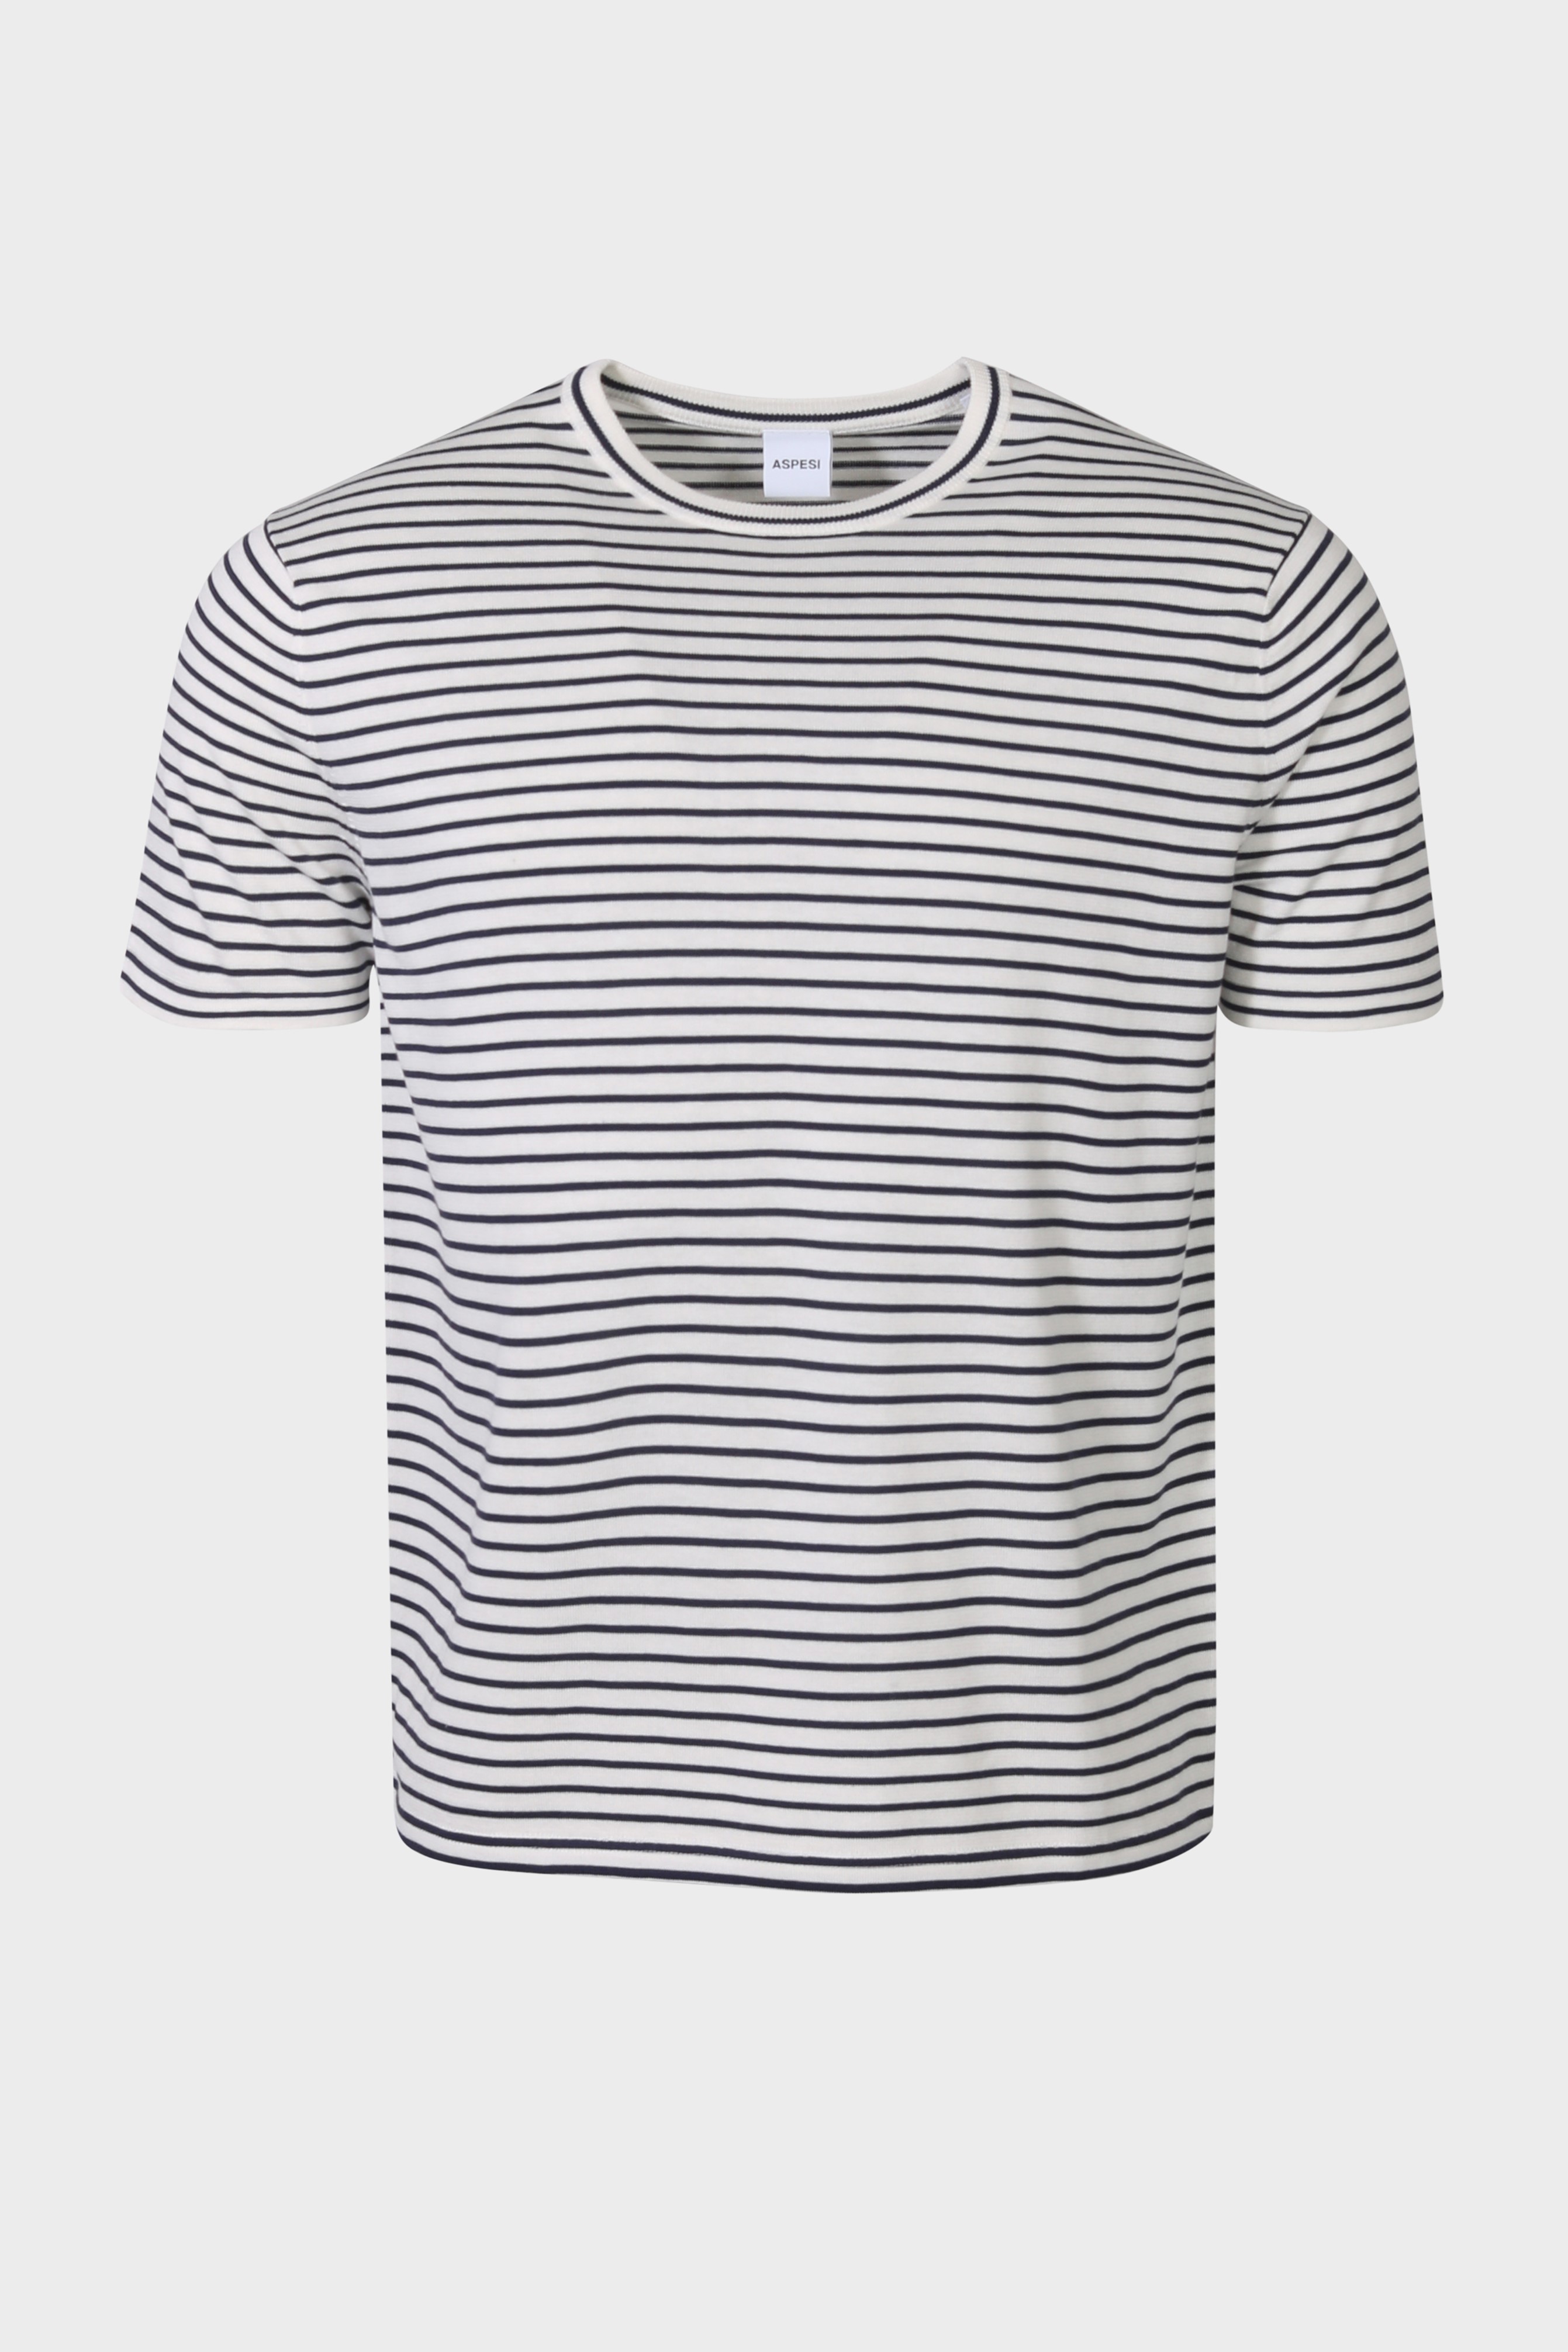 ASPESI Striped Knit T-Shirt in Navy/White 54